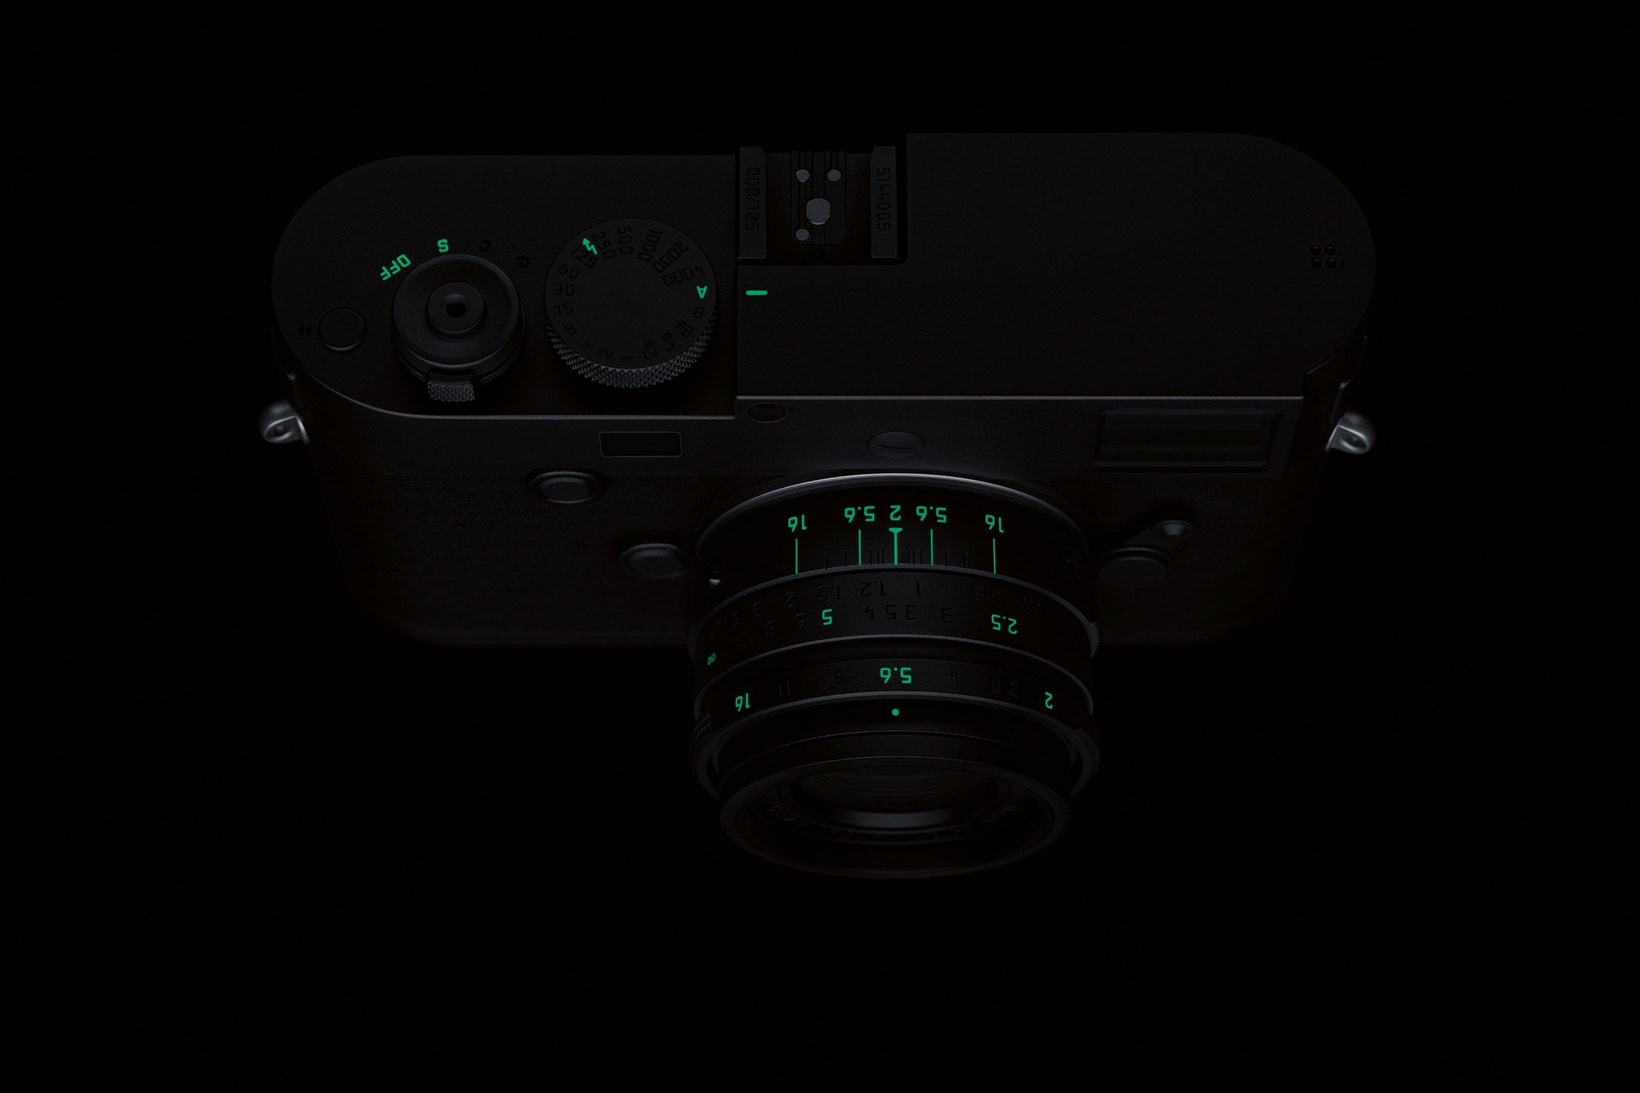 Leica M Monochrome “Stealth Edition” Edition Limitée 125 Exemplaires 15 000€ Rag & Bone Marcus Wainwright